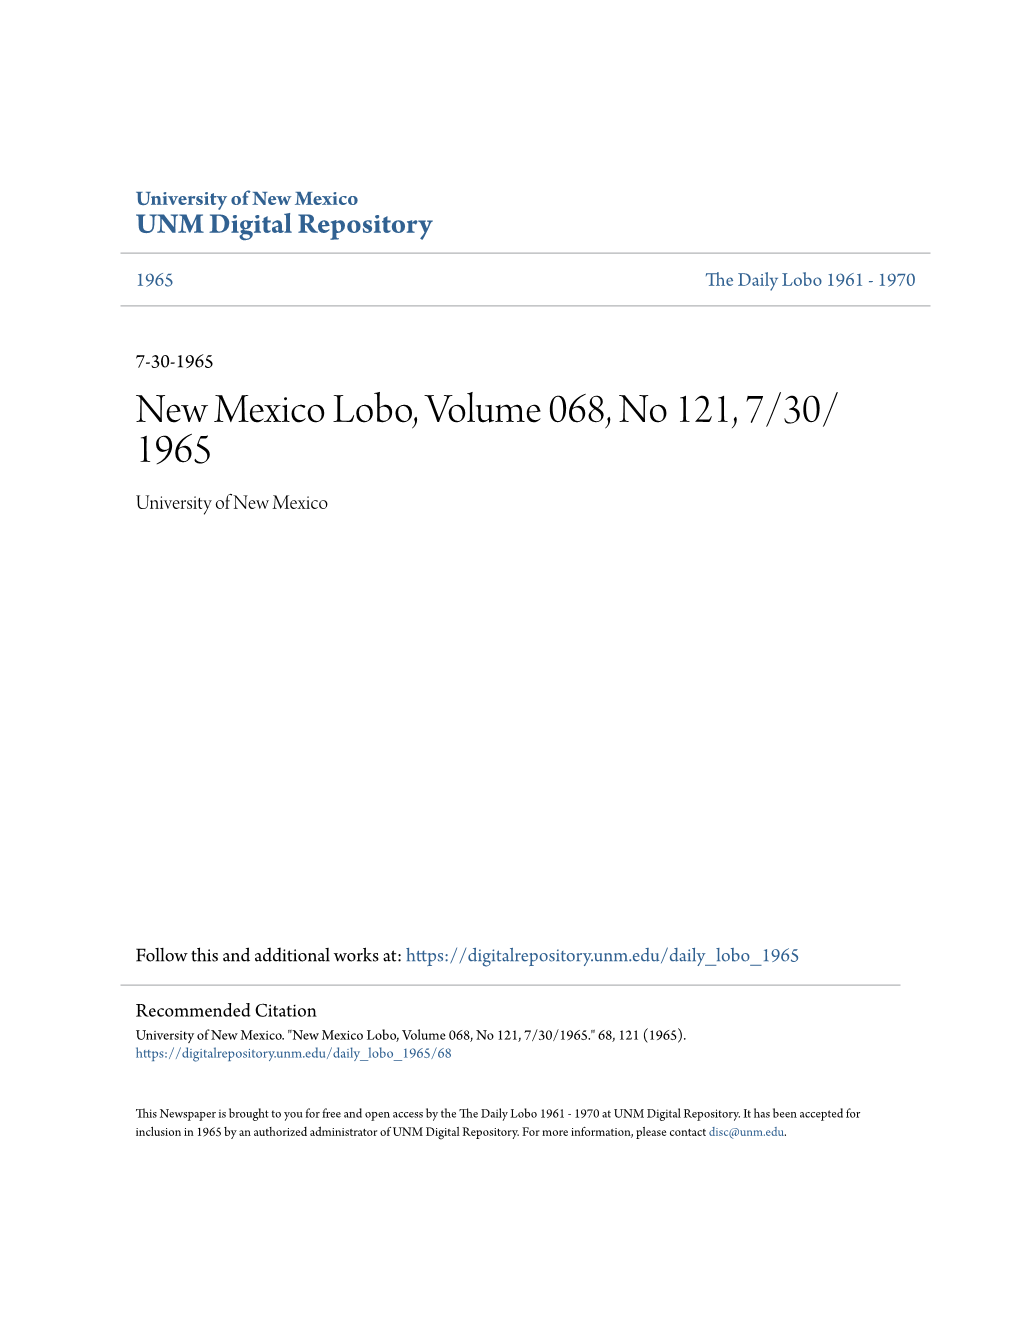 New Mexico Lobo, Volume 068, No 121, 7/30/1965." 68, 121 (1965)